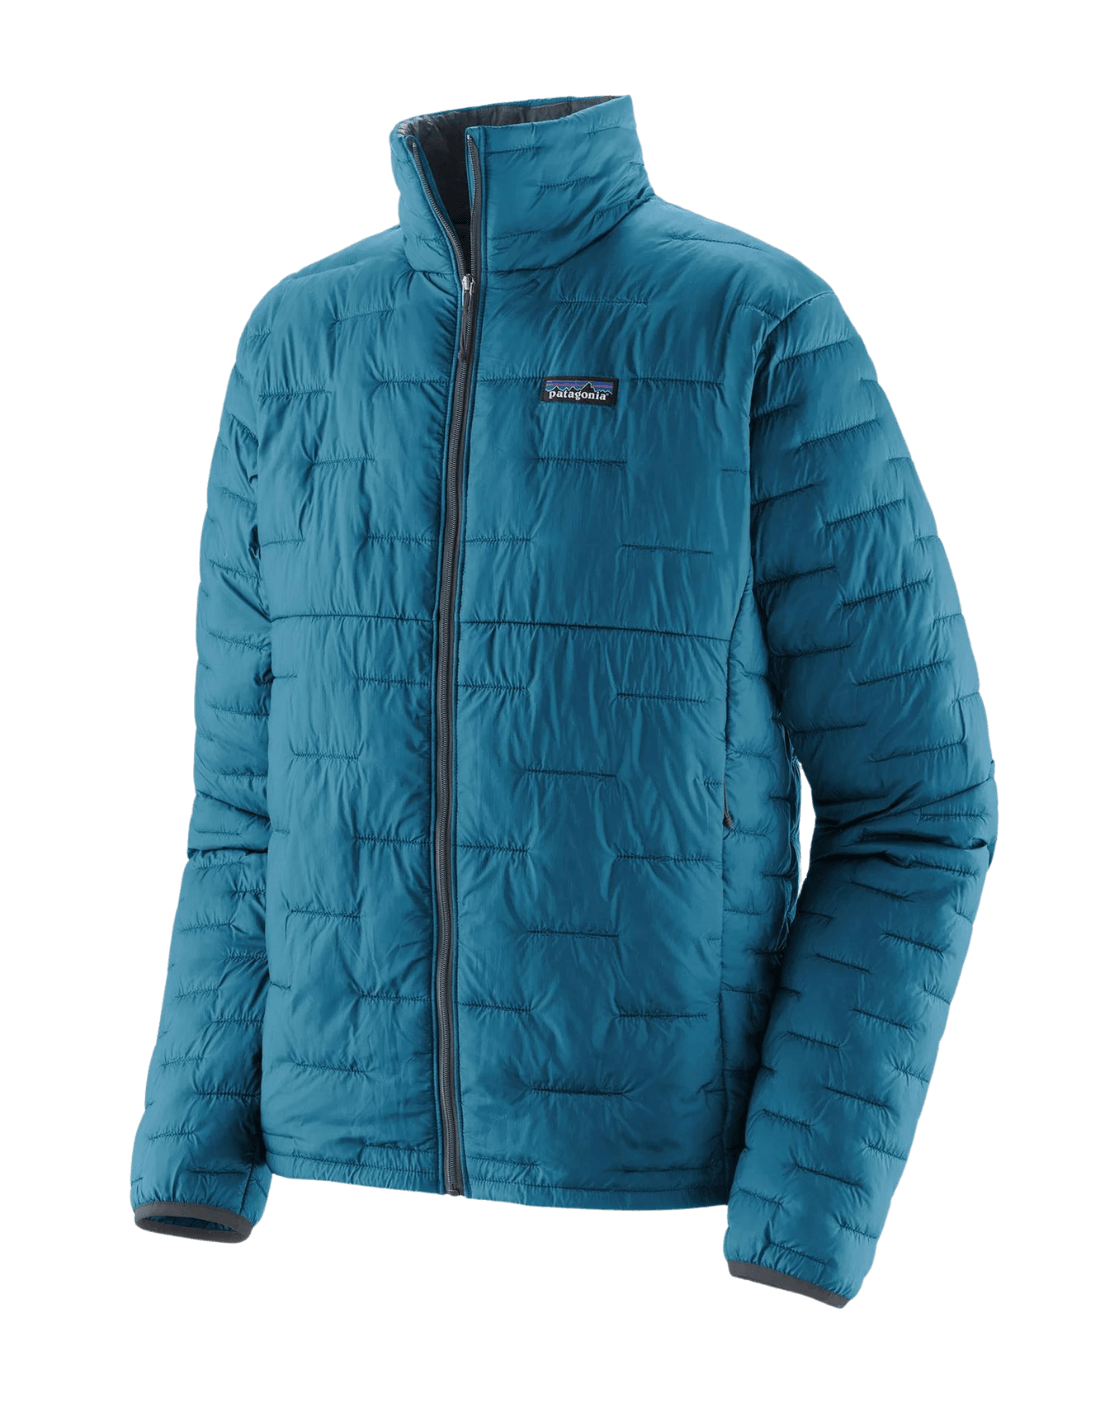 Patagonia Micro Puff jacket